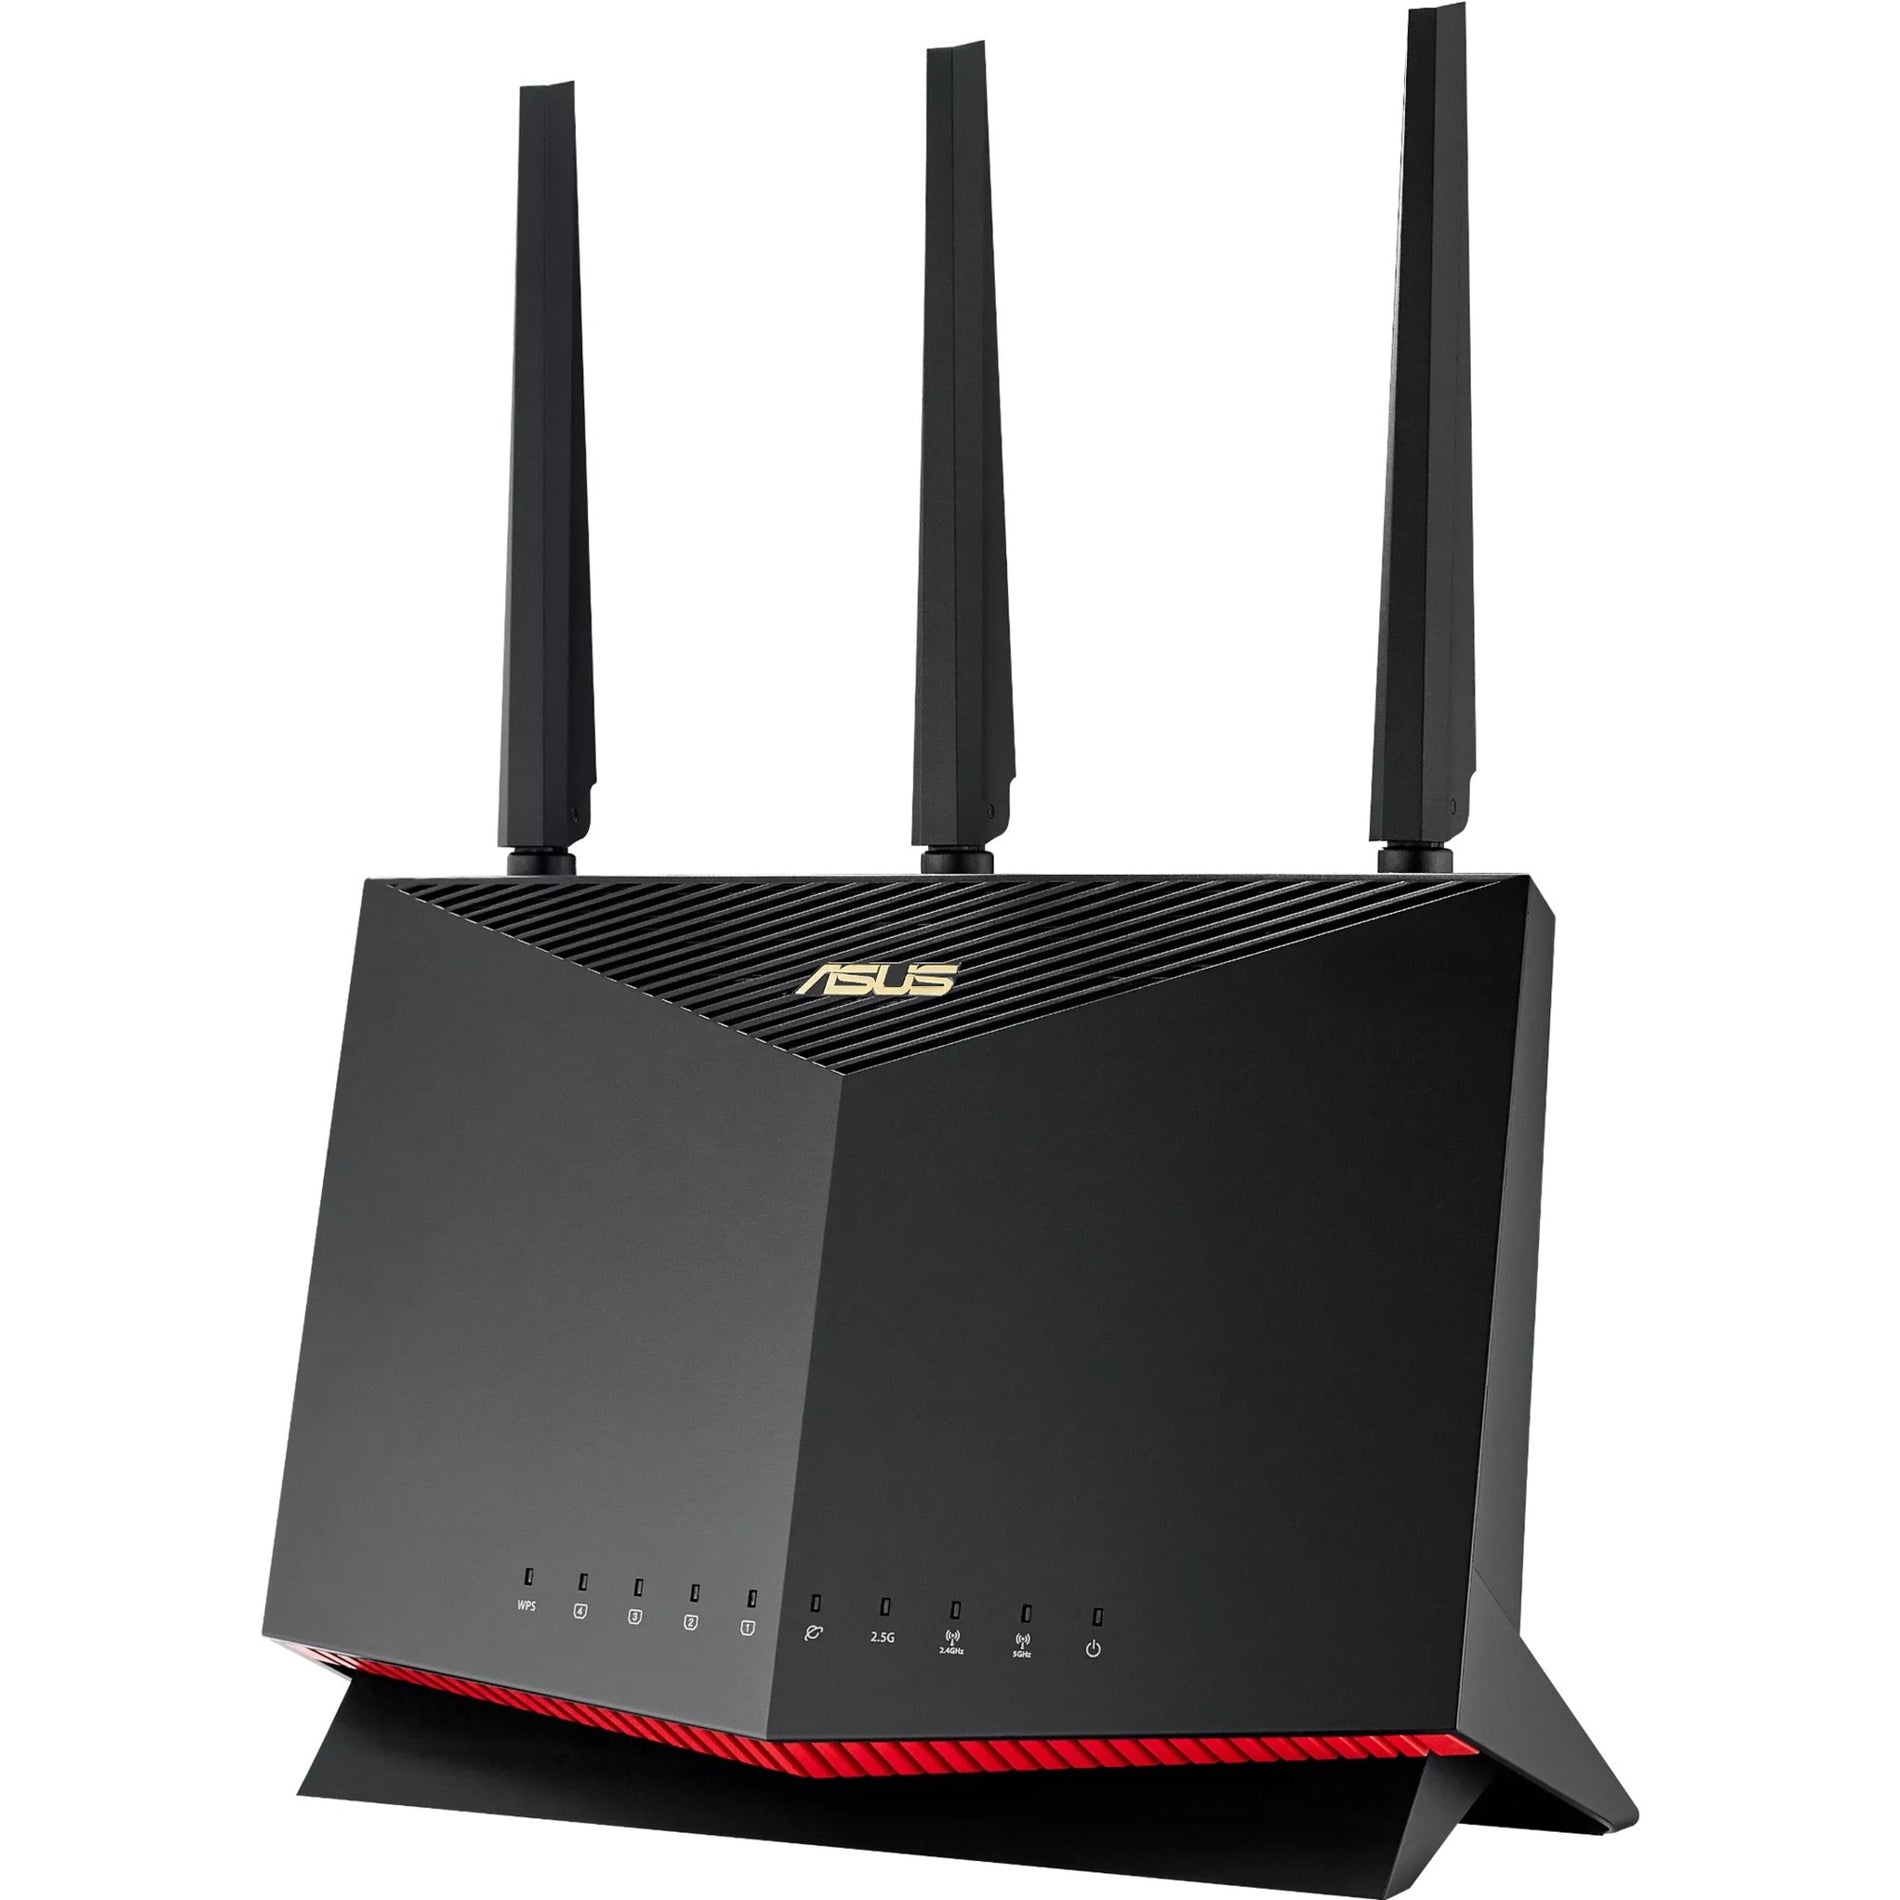 Router inalámbrico Asus RT-AX86U PRO RT-AX86U Pro Wi-Fi 6 Banda Dual Ethernet de 2.5 Gigabits Compatible con Alexa. Marca: Asus. Traduce "Asus" como "Asus" en español.